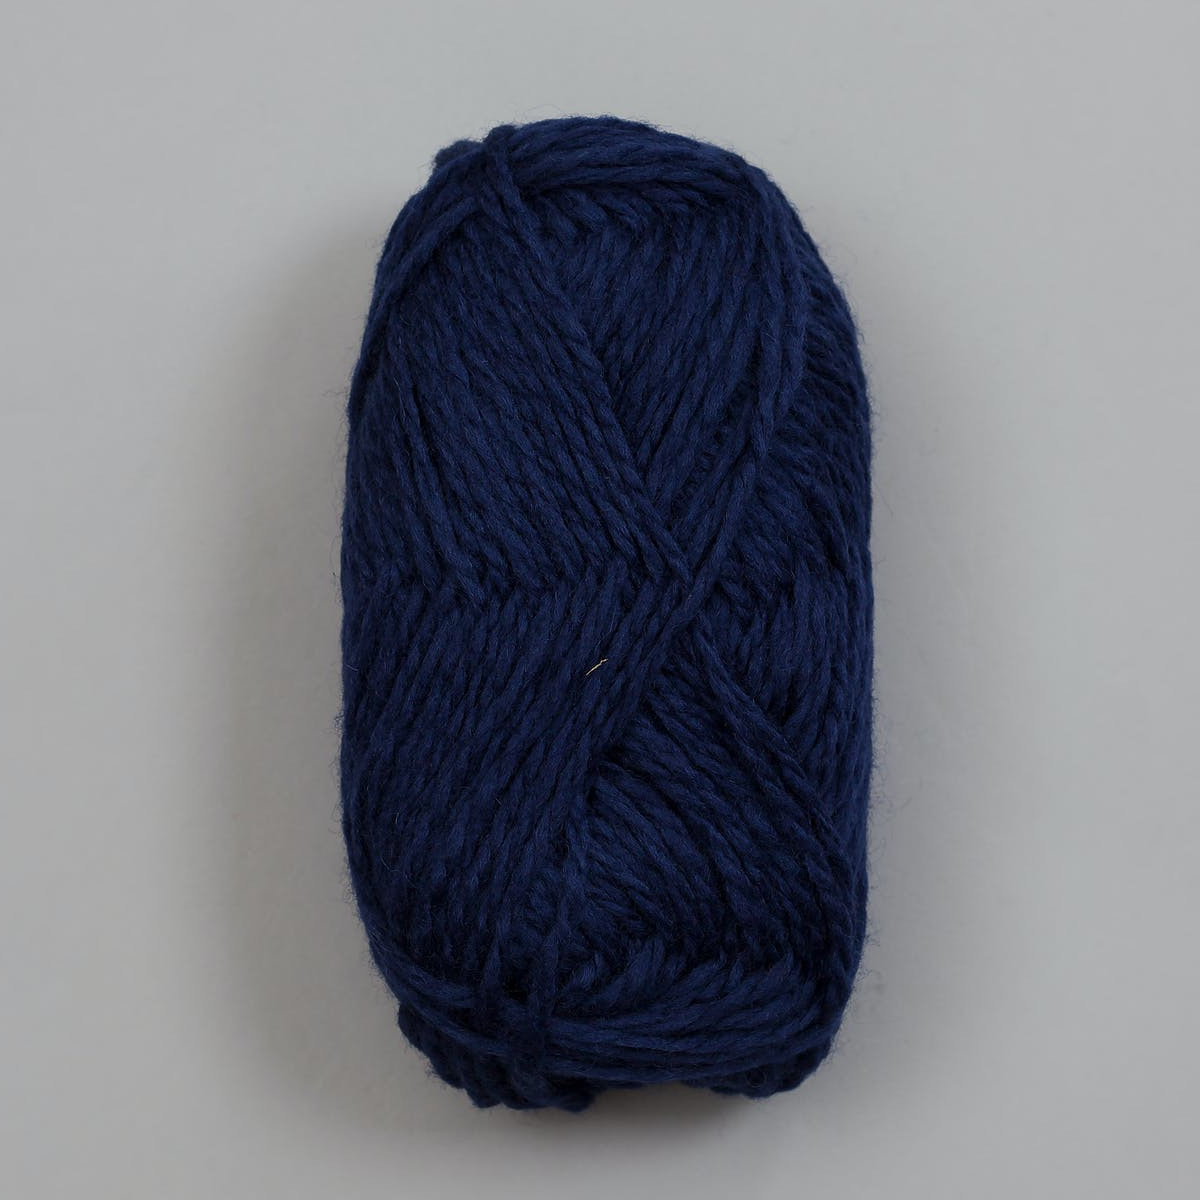 Vams - Midnattsblå / Mitternachtsblau (77)